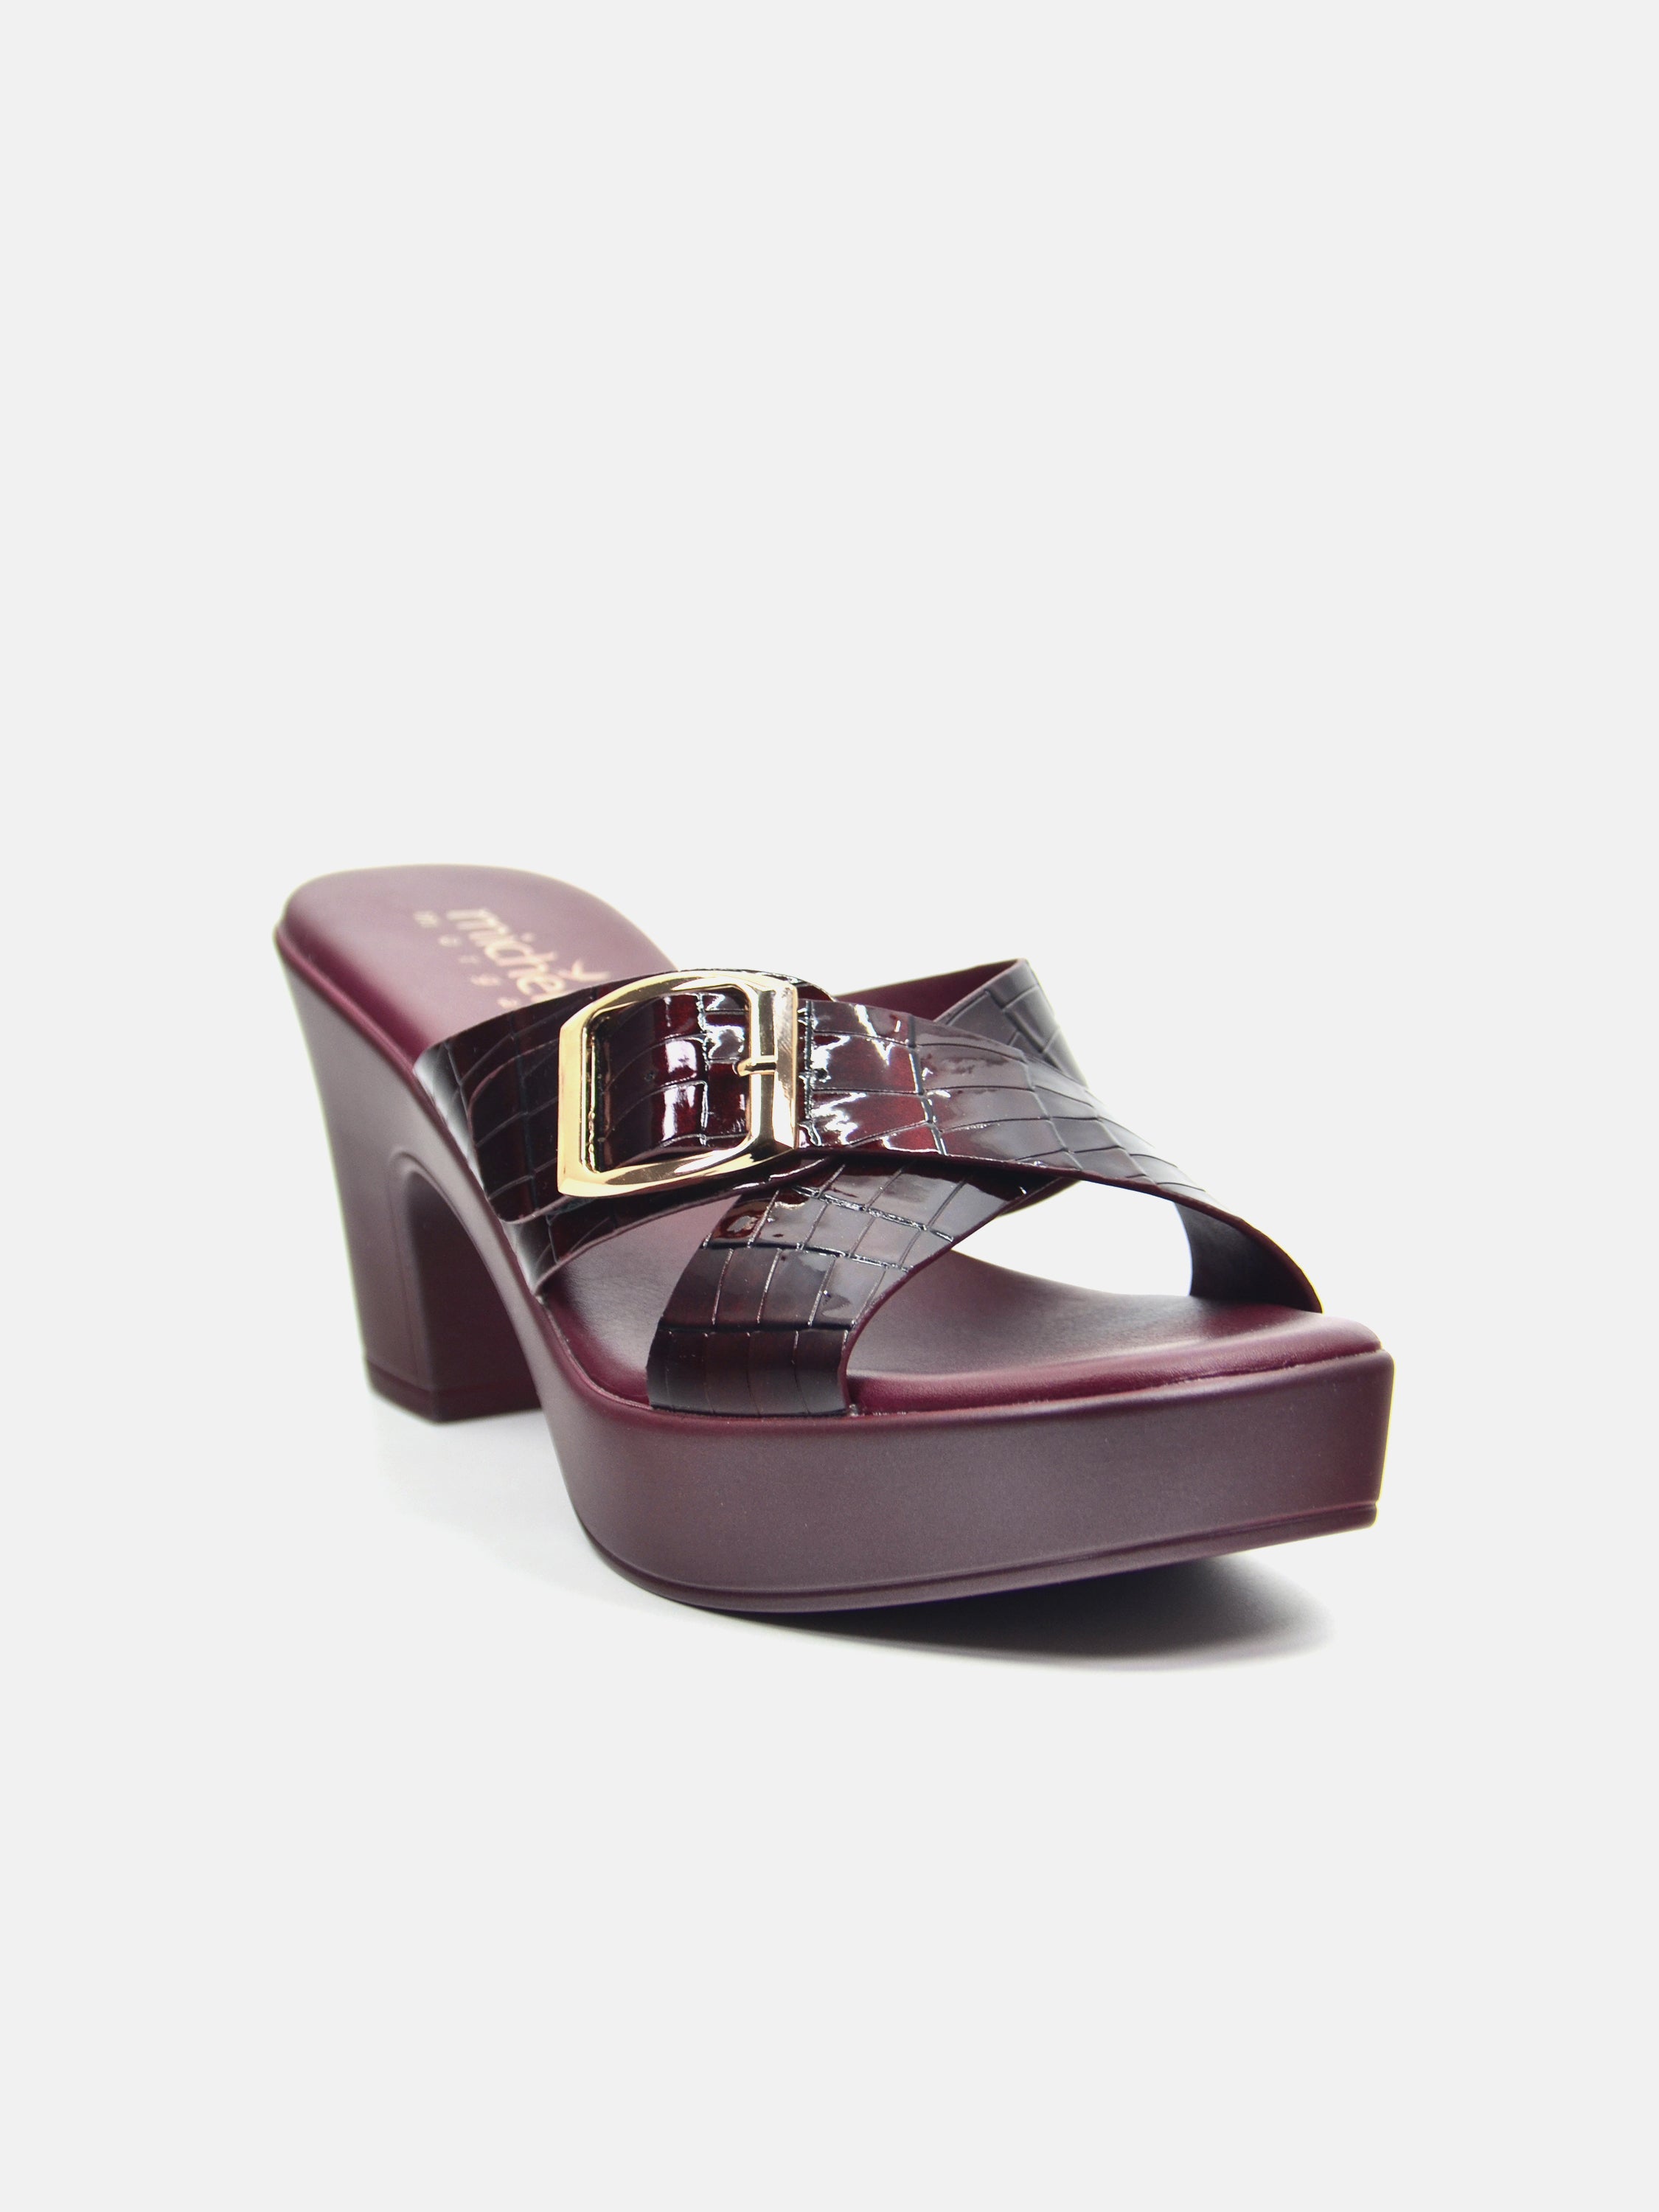 Michelle Morgan 114RJ858 Women's Heeled Sandals #color_Maroon